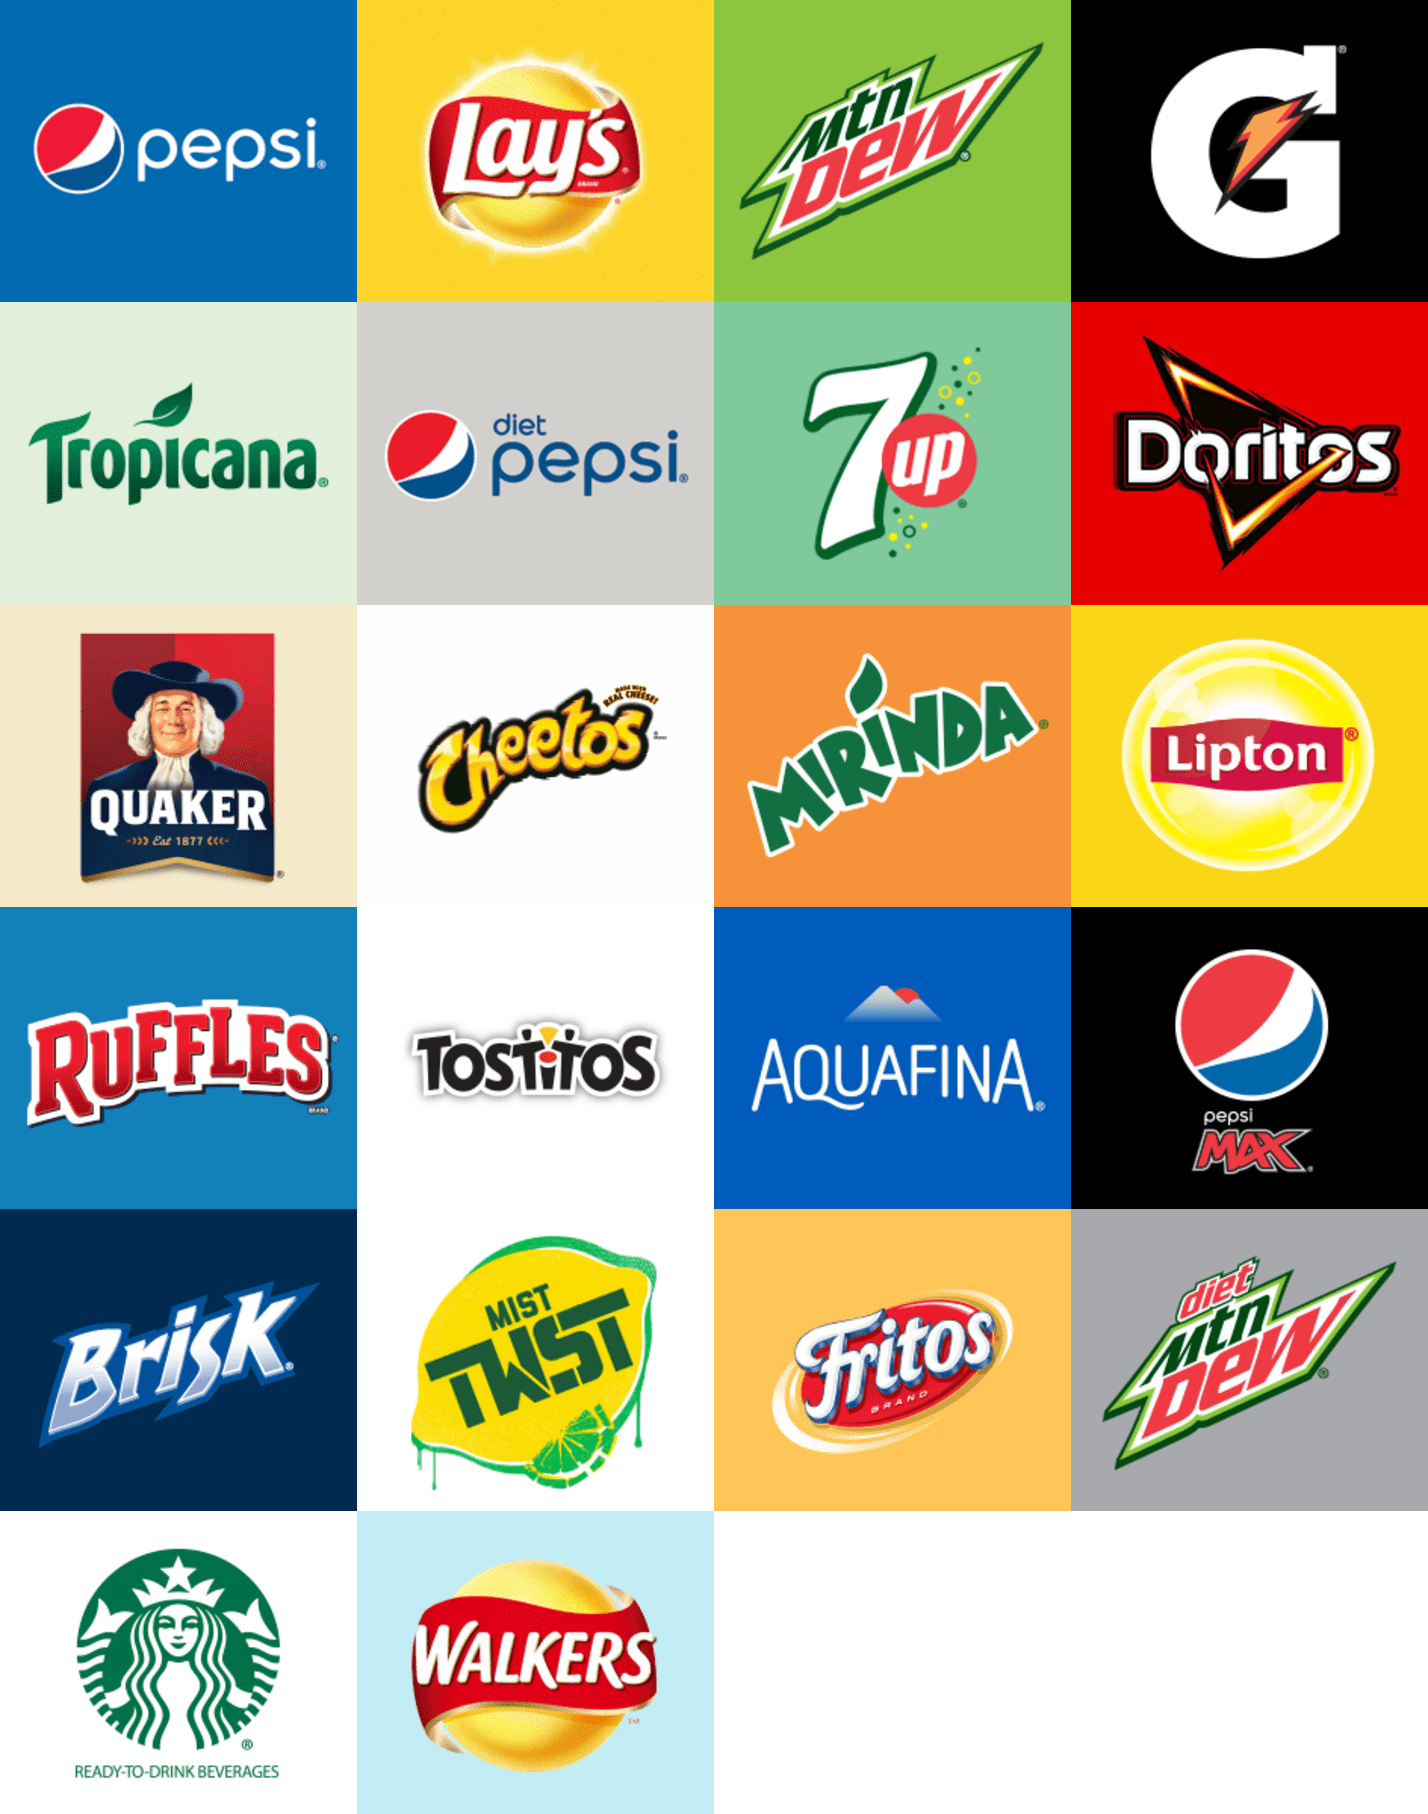 Pepsi Product Logo - PepsiCo SWOT Analysis (5 Key Strengths in 2019)